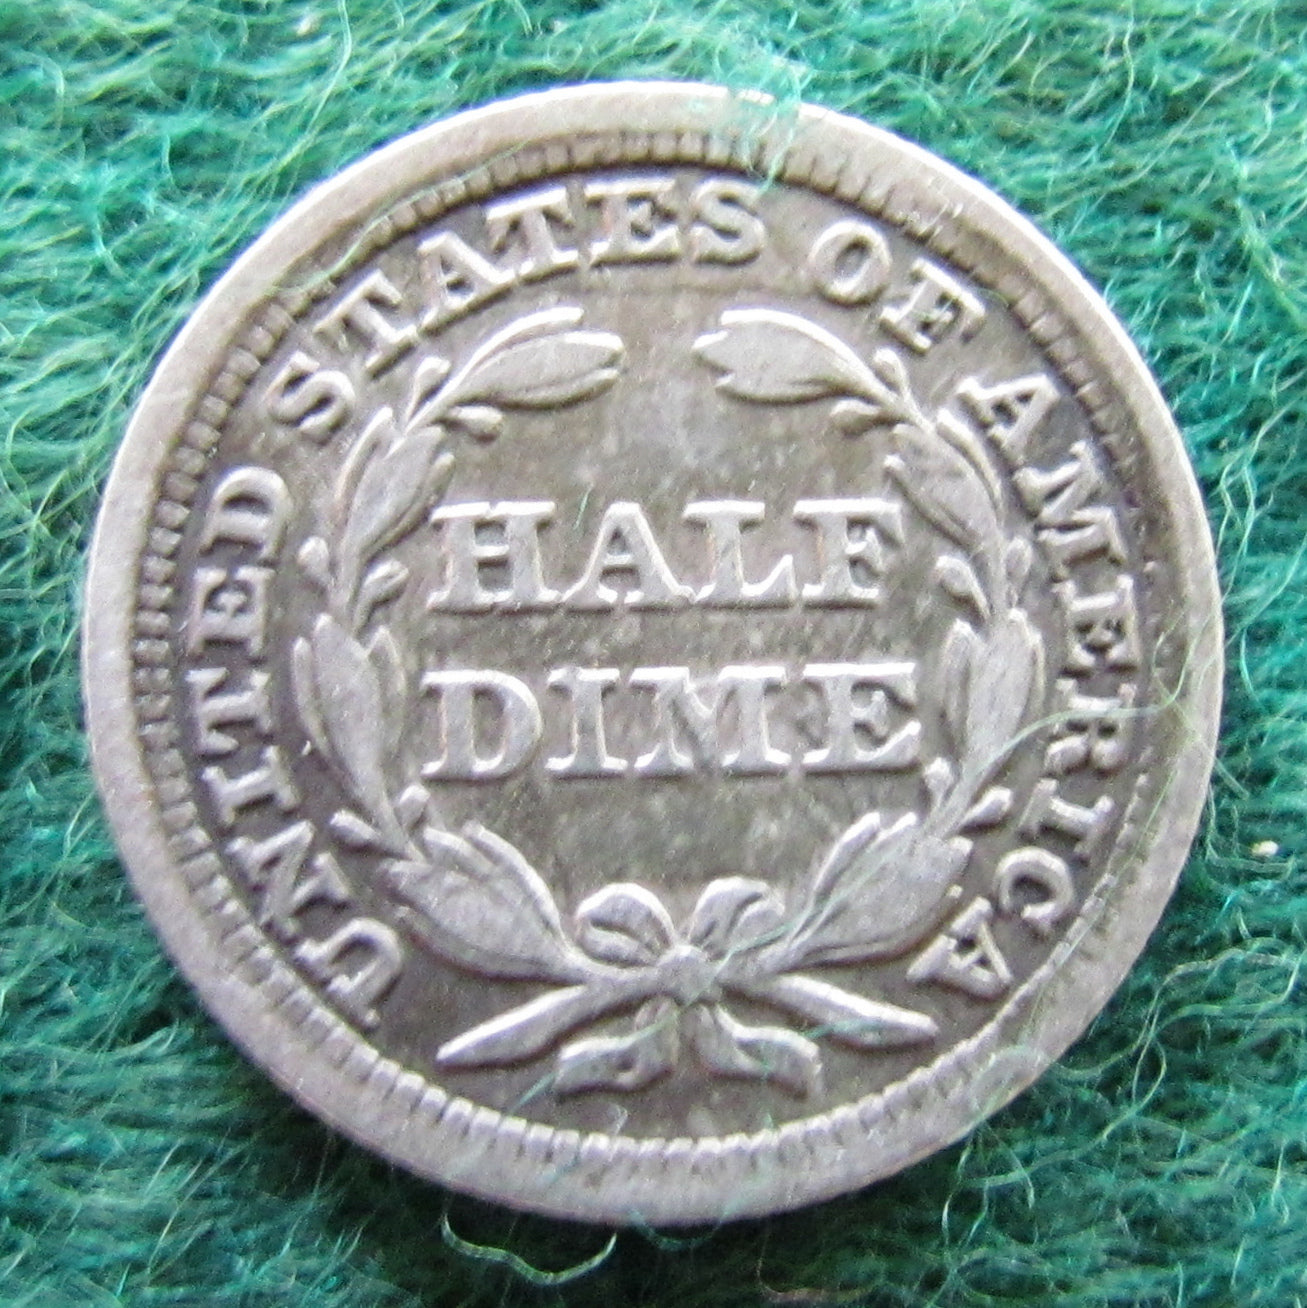 USA American 1855 Silver Seated Liberty Half Dime Coin - Circulated